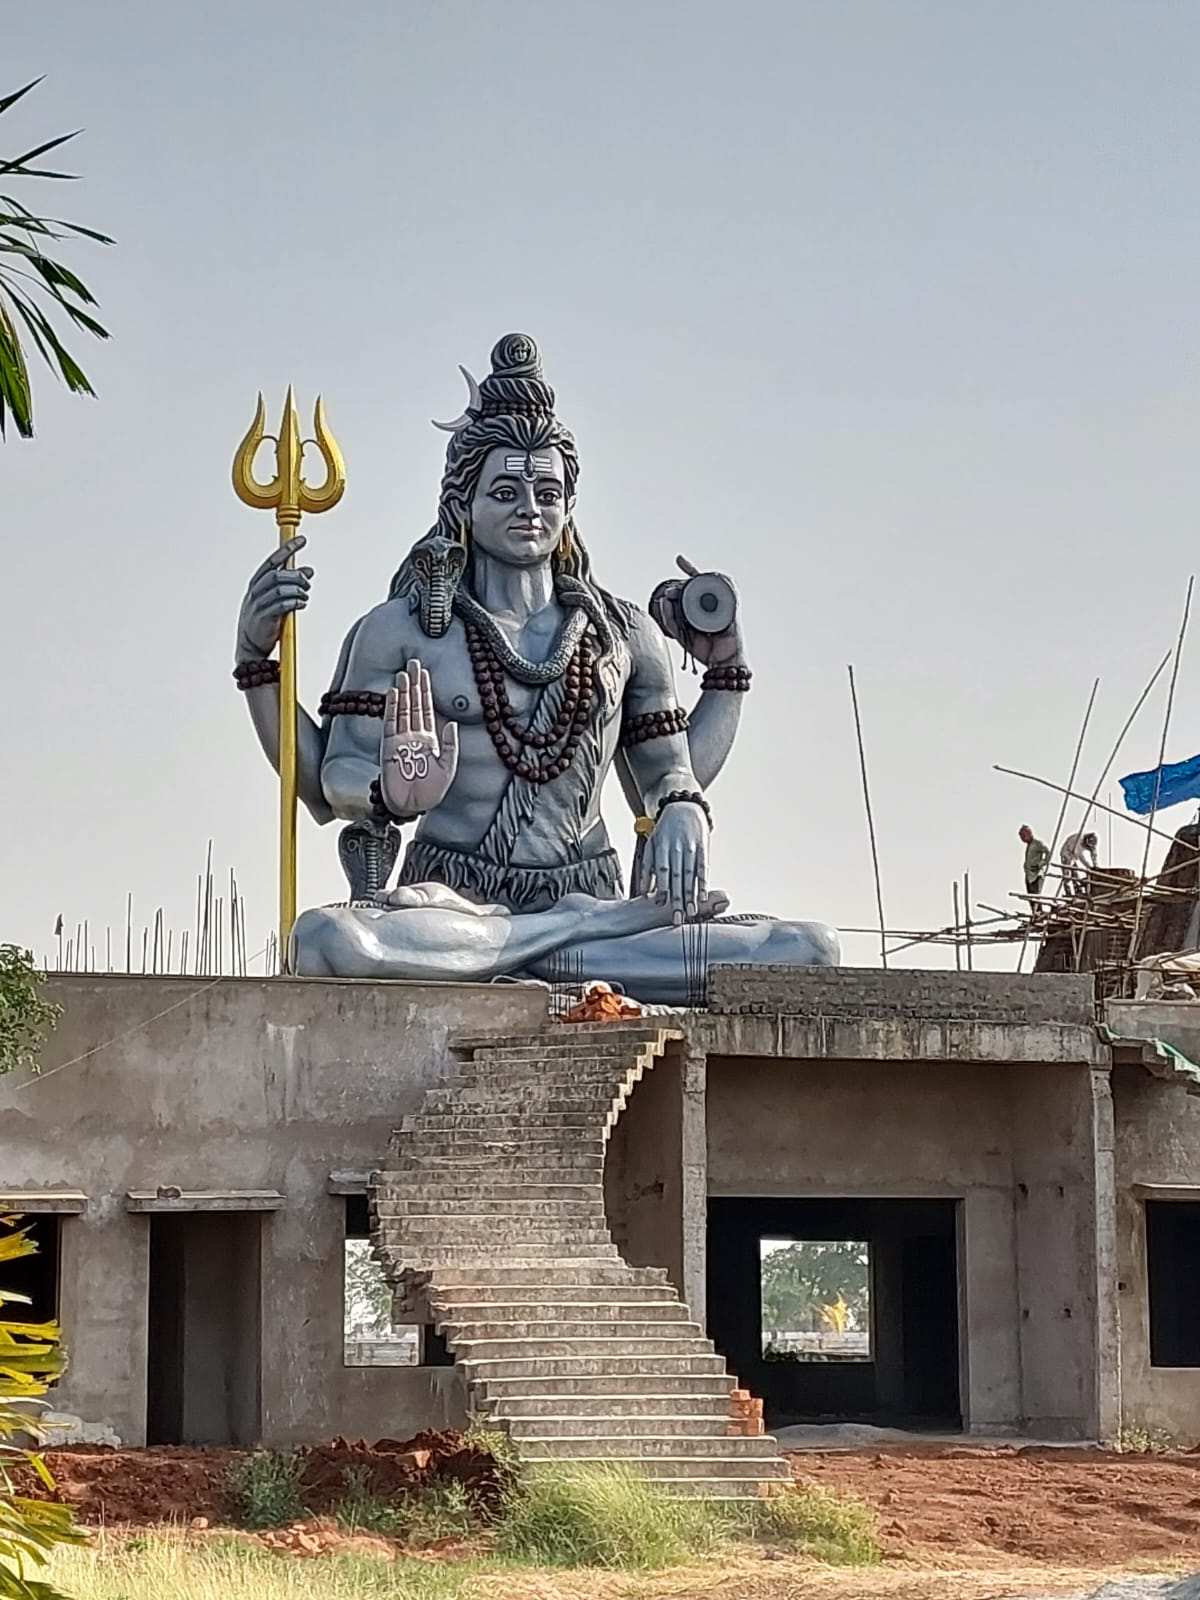 A spirtual feeling with 34 feet Shri Mahadeva statue and Shri Hanuman temple